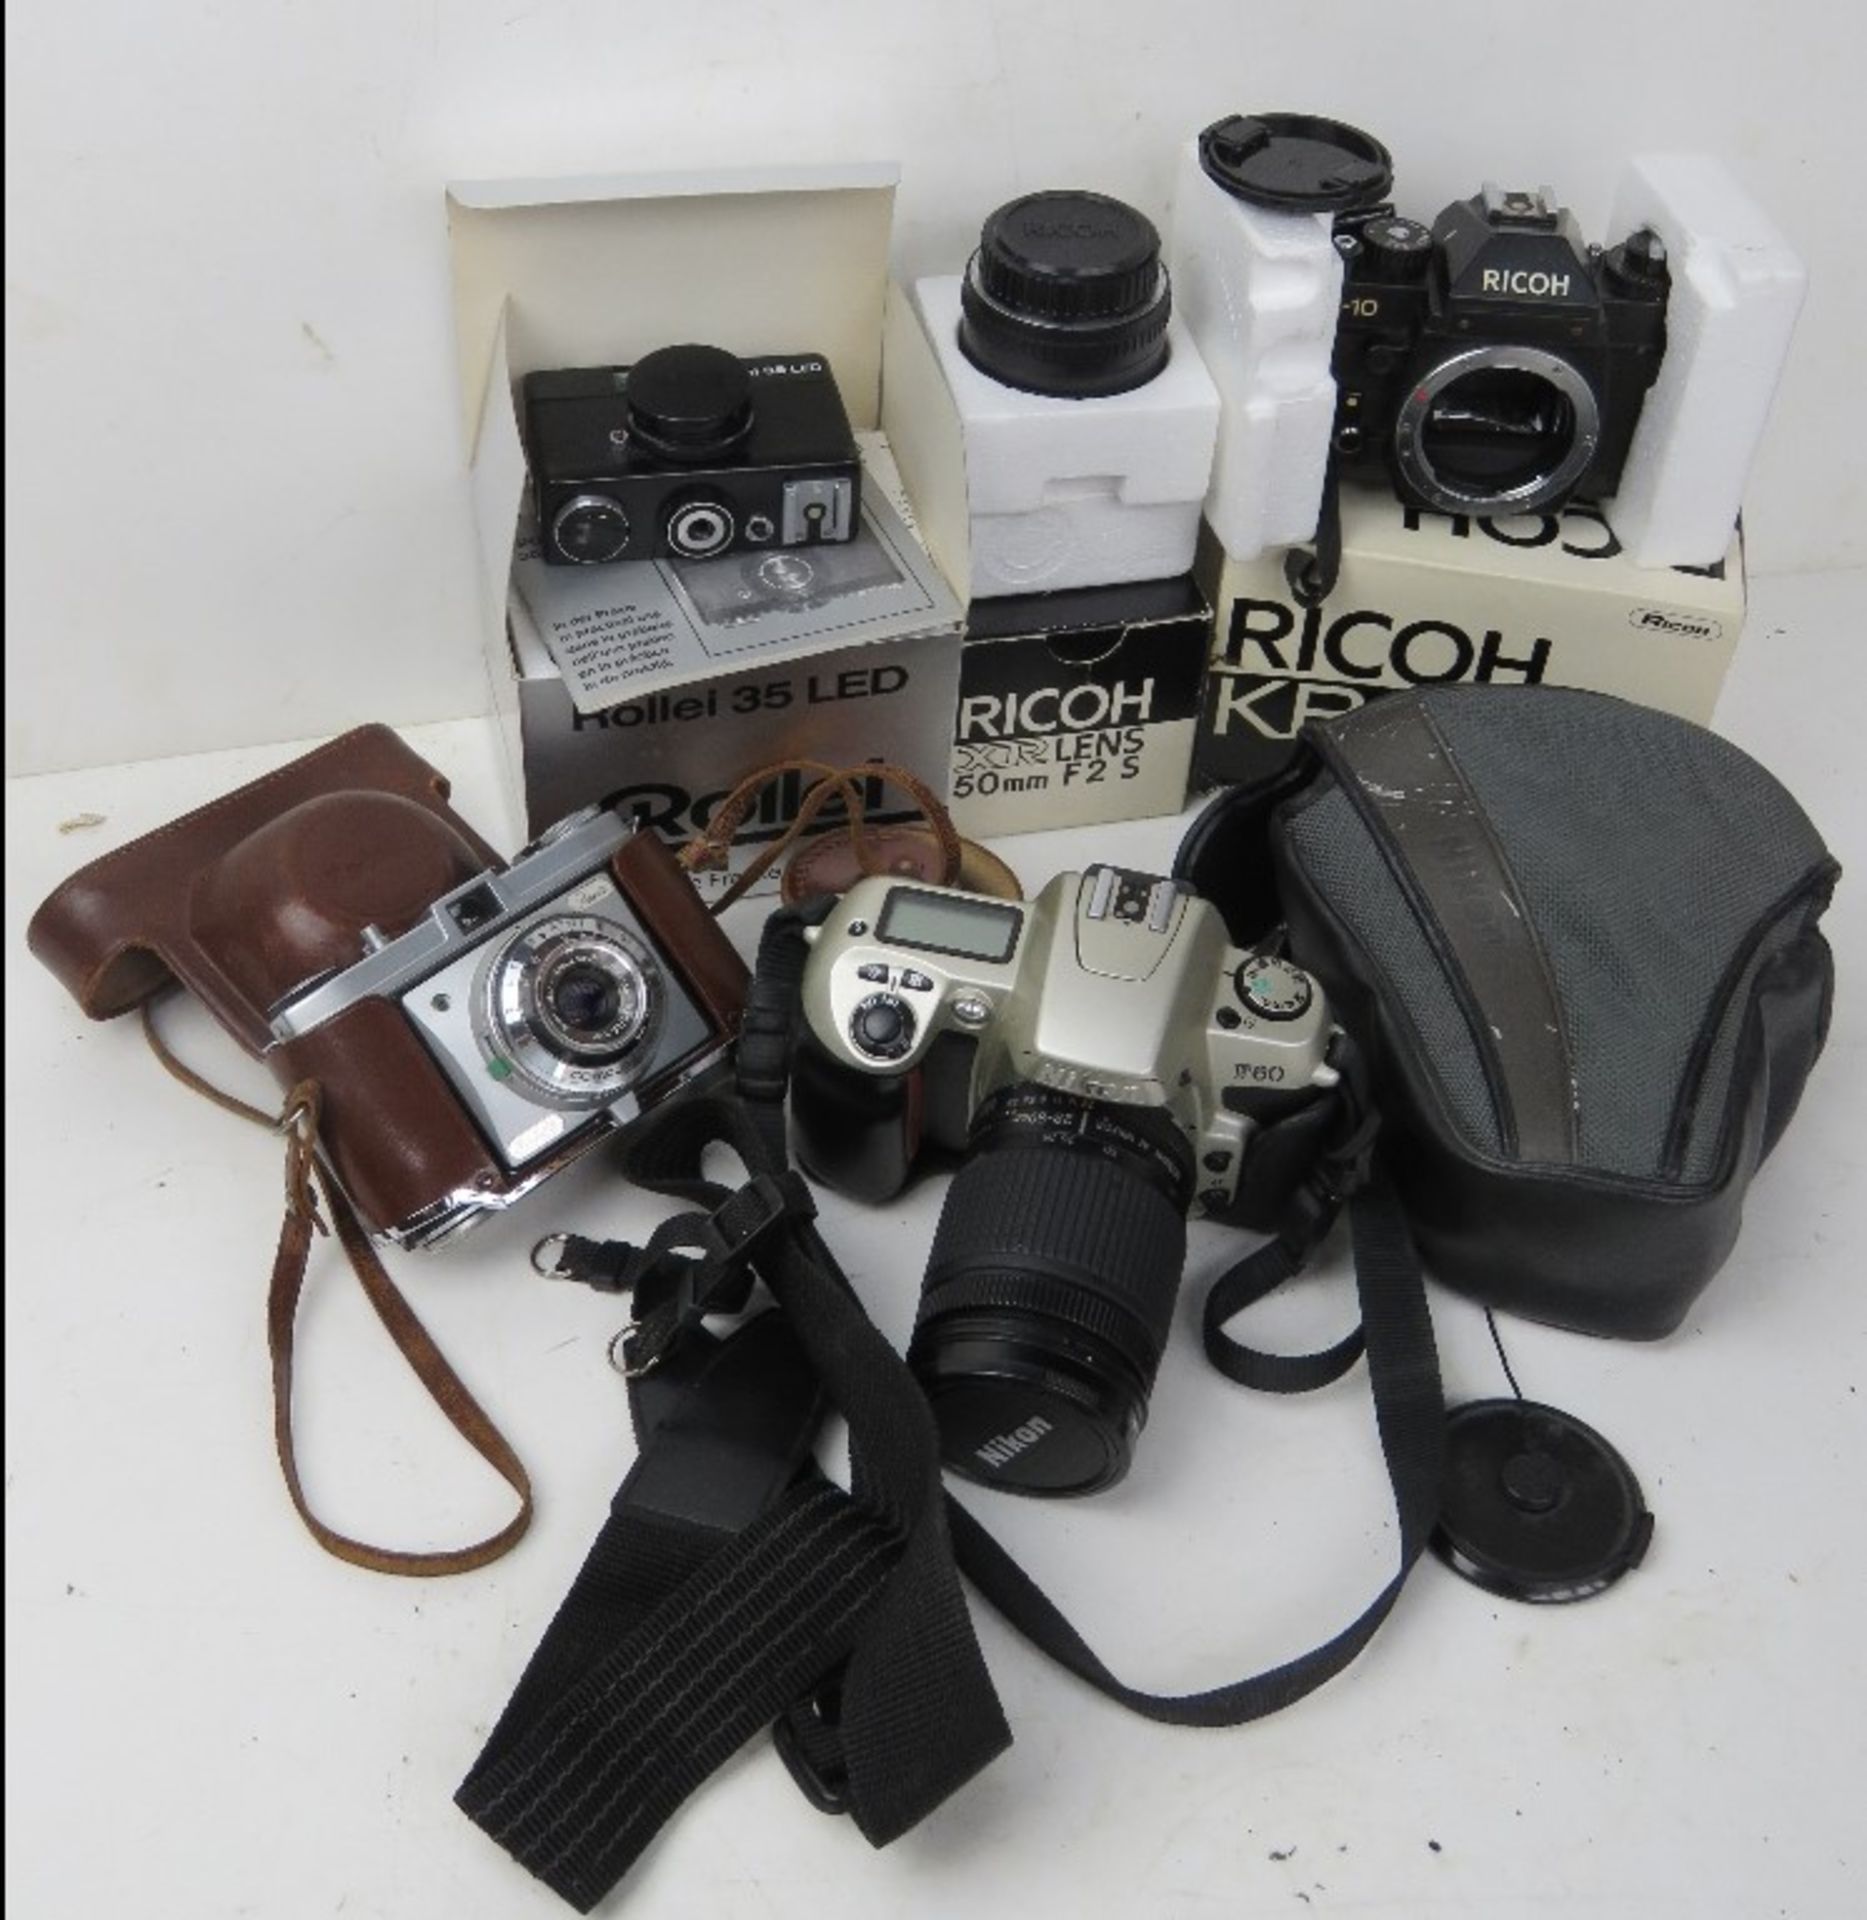 A quantity of cameras and equipment inc Ricoh XR lens in original box, Ricoh KR-10 in original box,